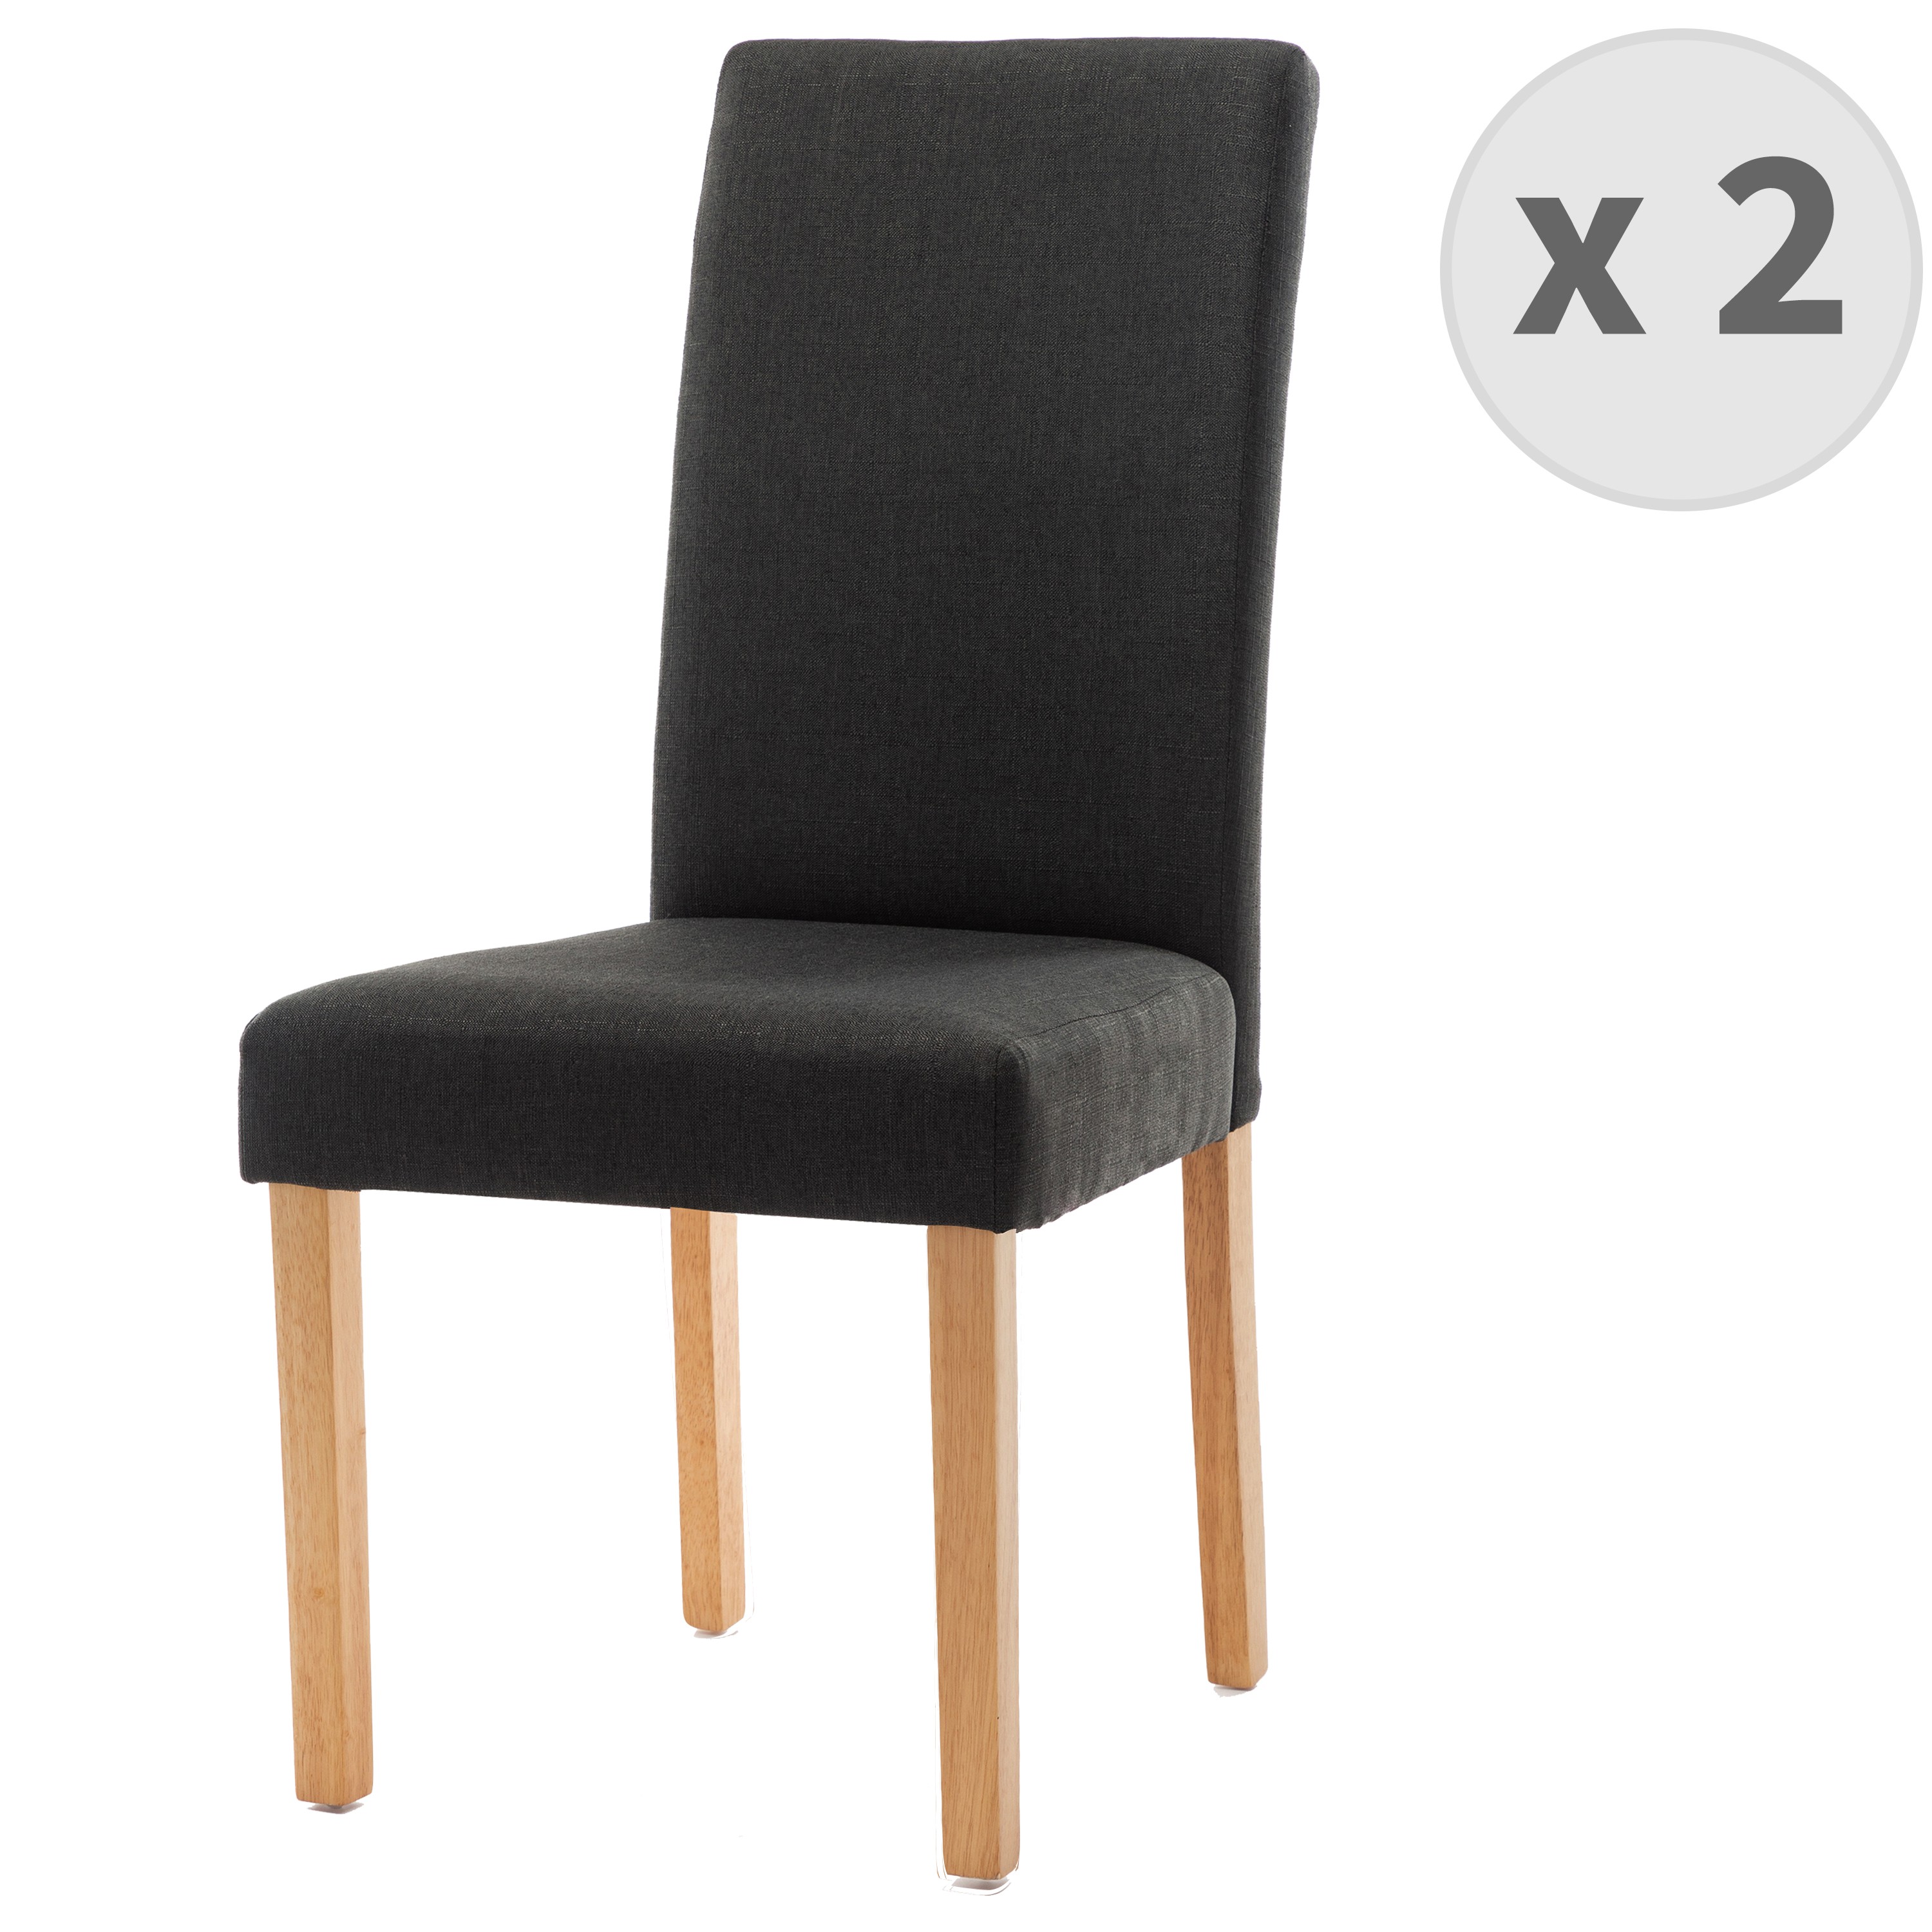 Chaise de salle à manger tissu anthracite pieds bois (x2)